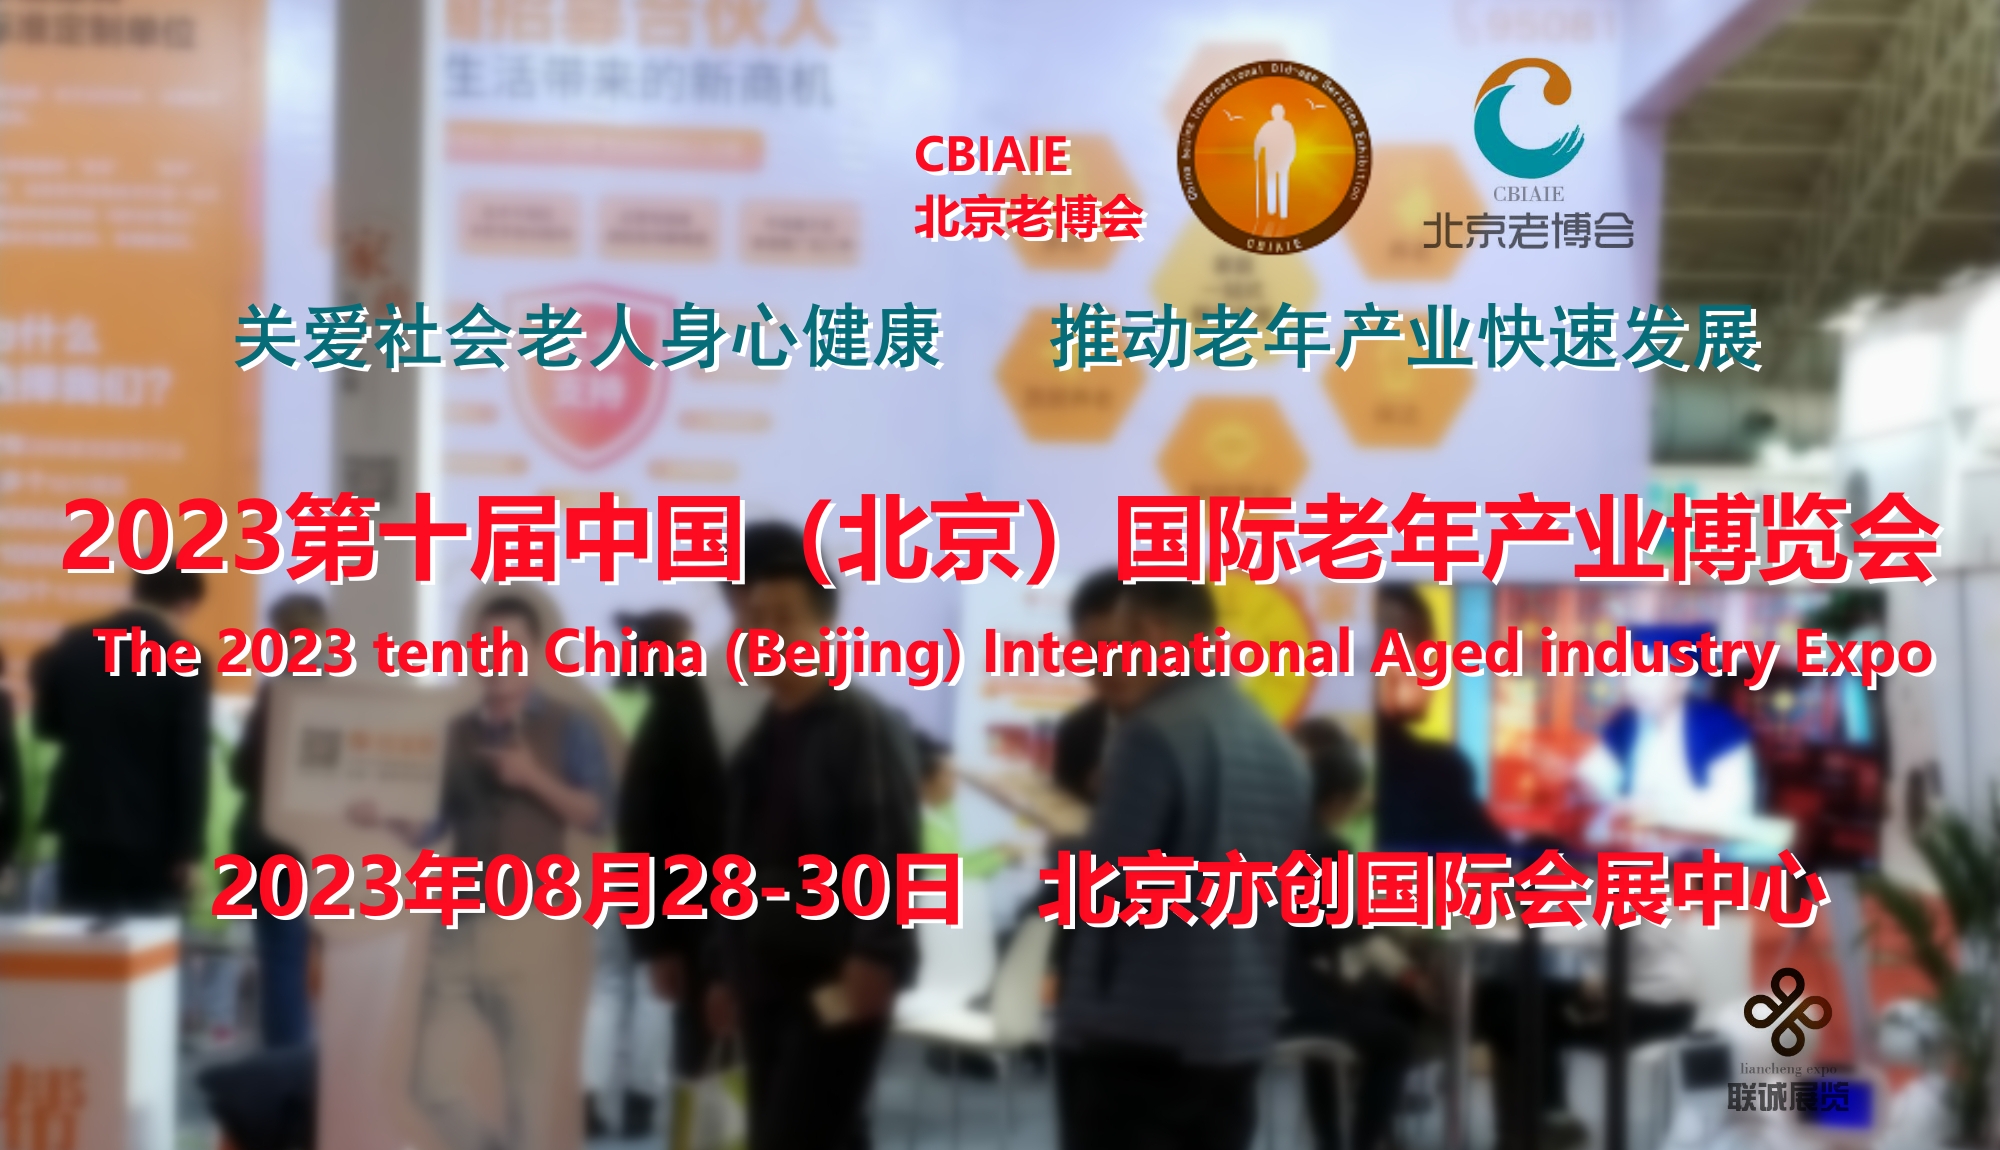 CBIAIE北京老博会：8月份，是2023年度老年行业唯合适举办展览活动的季节